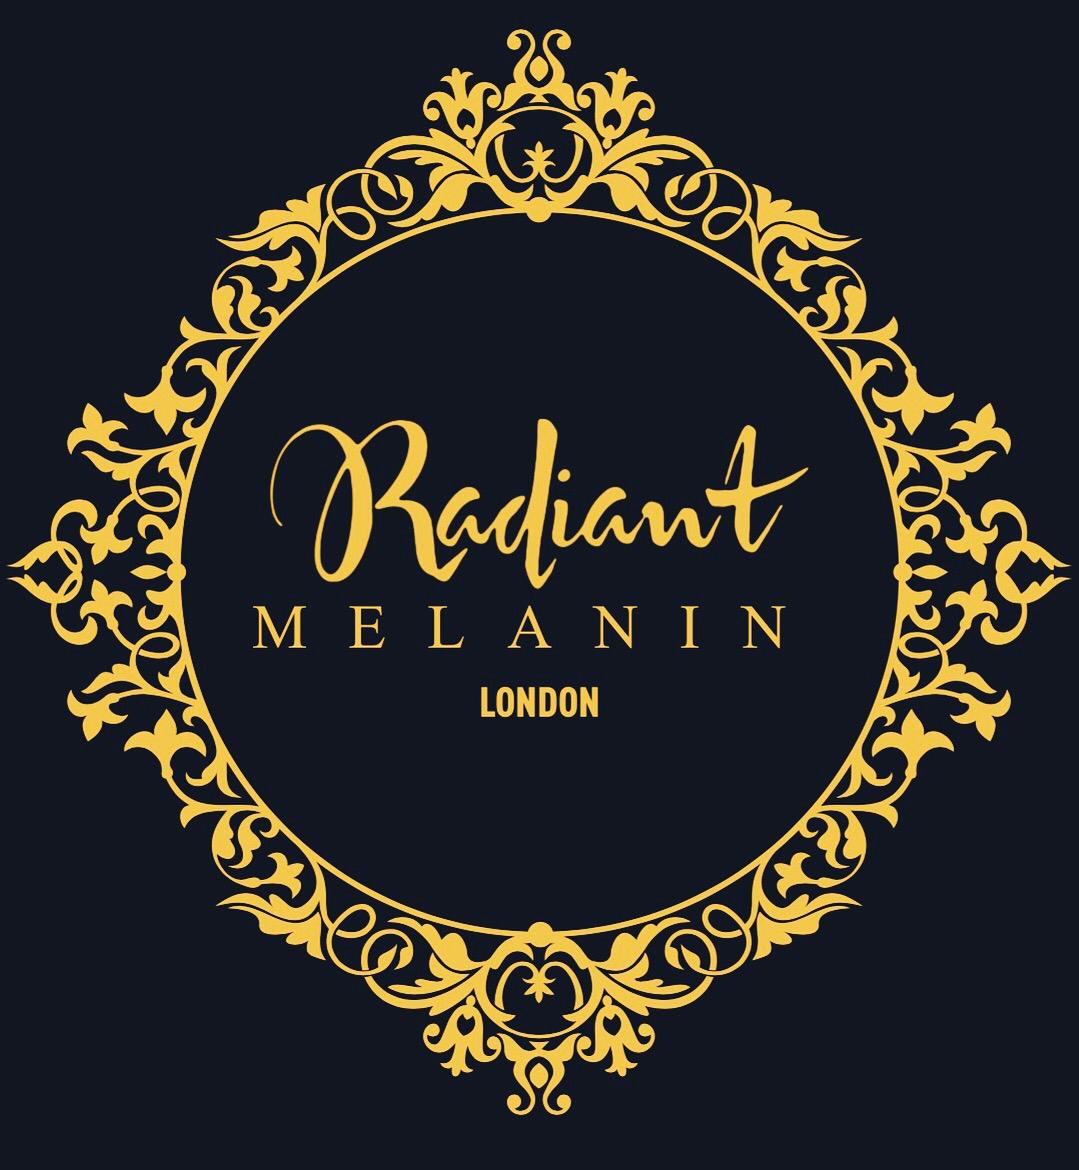 Radiant Melanin London Limited logo